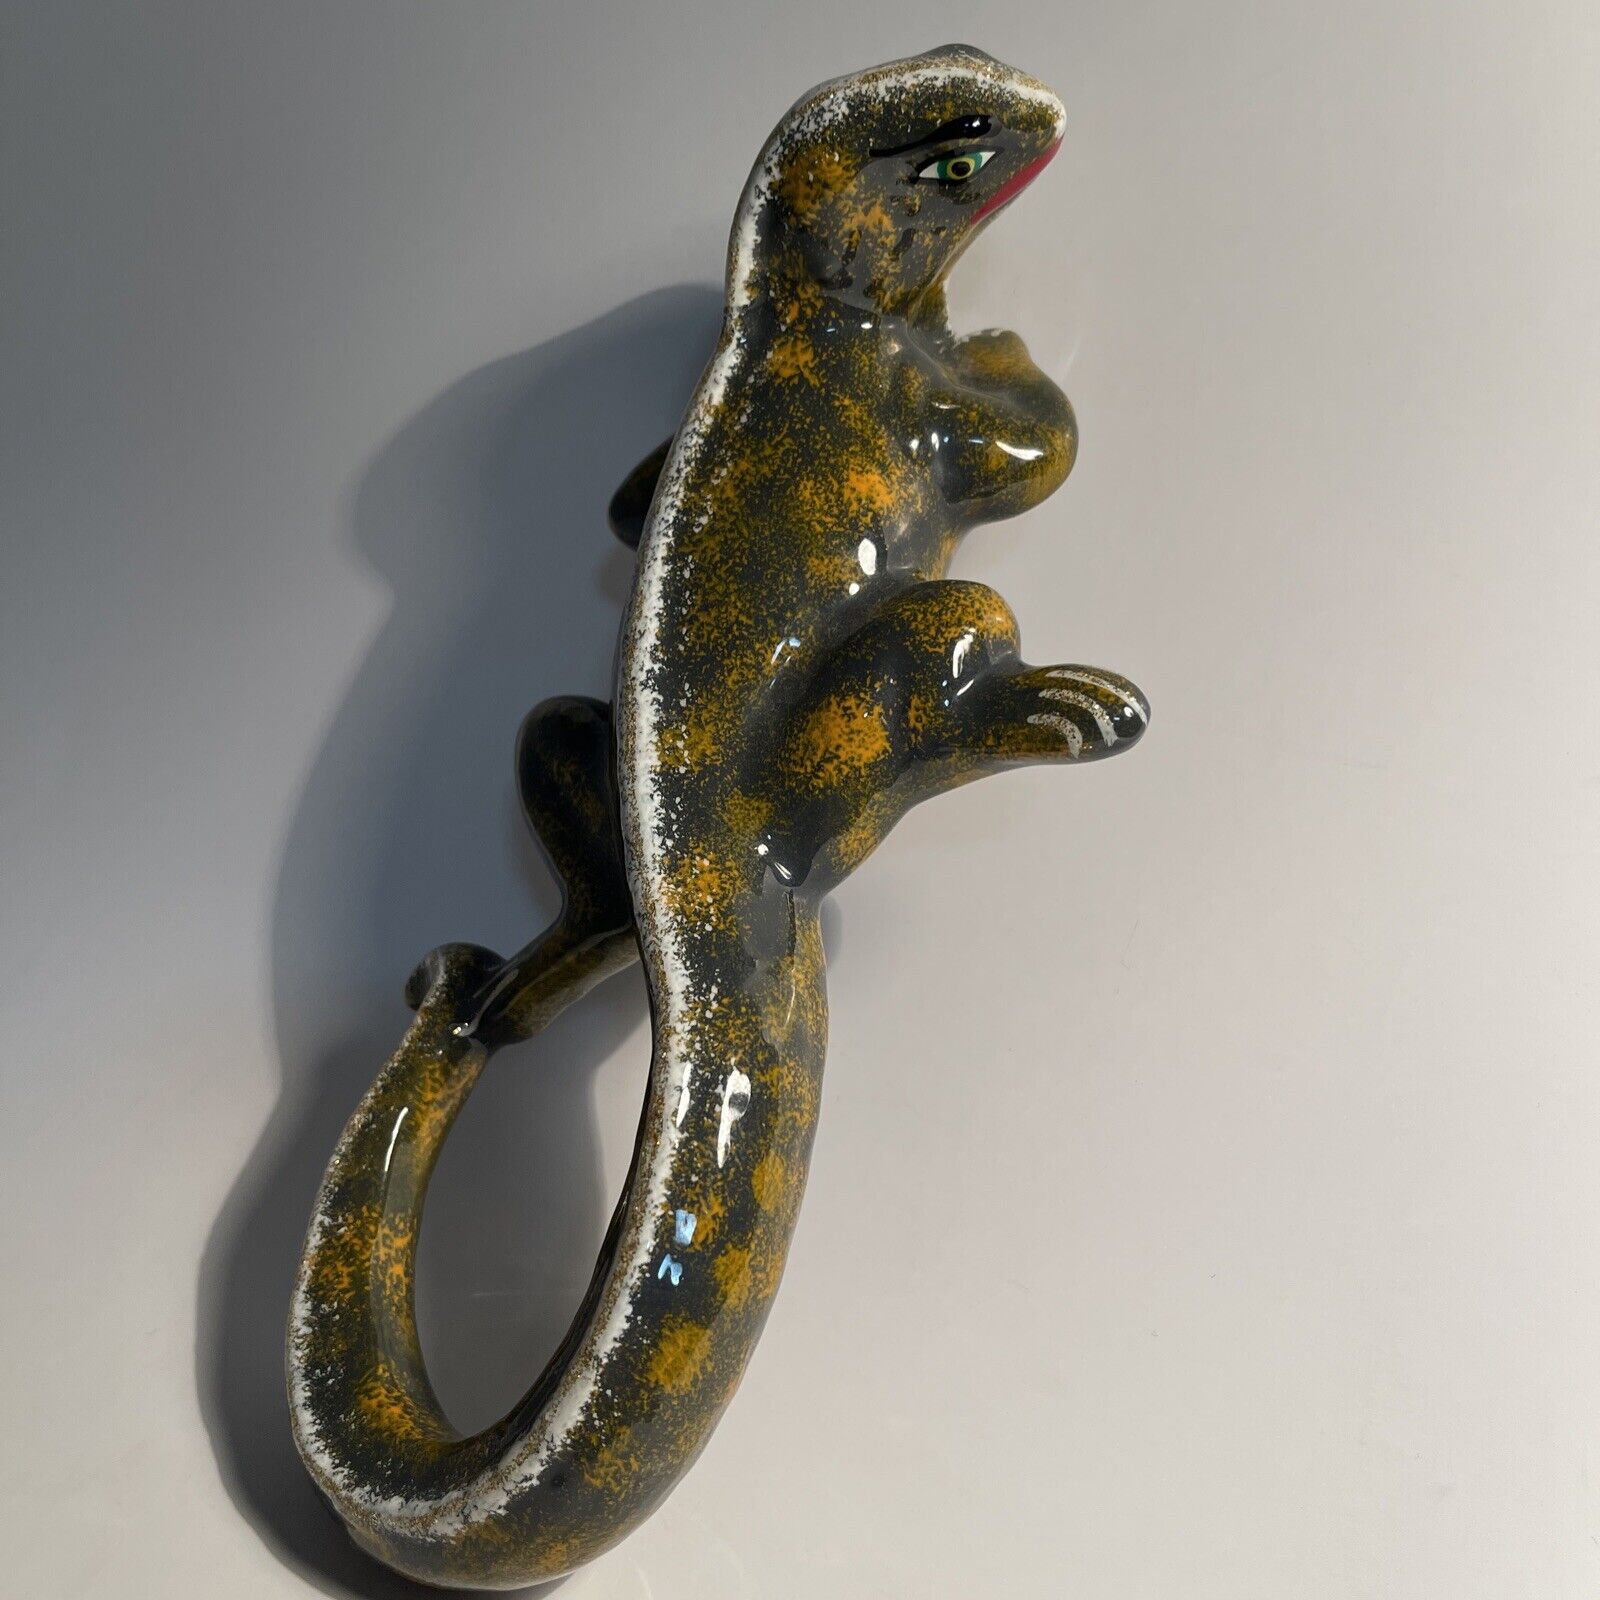 Hand Painted Mexican Ceramic Iguana Lizard Figurine